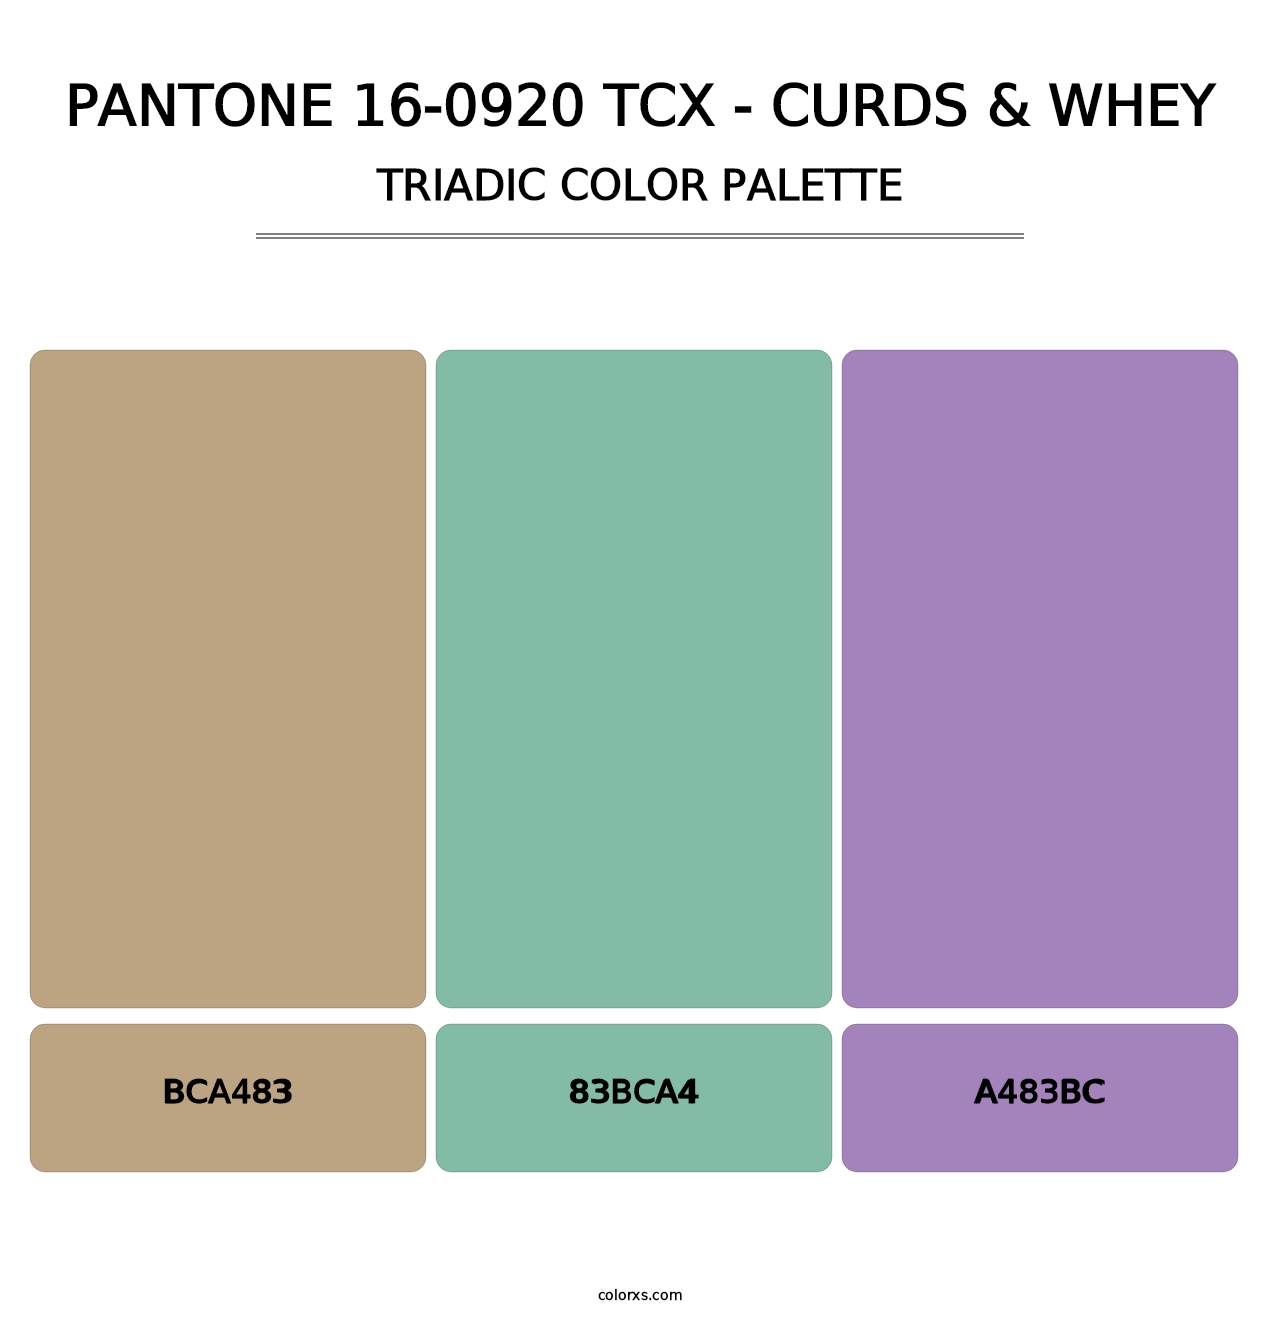 PANTONE 16-0920 TCX - Curds & Whey - Triadic Color Palette